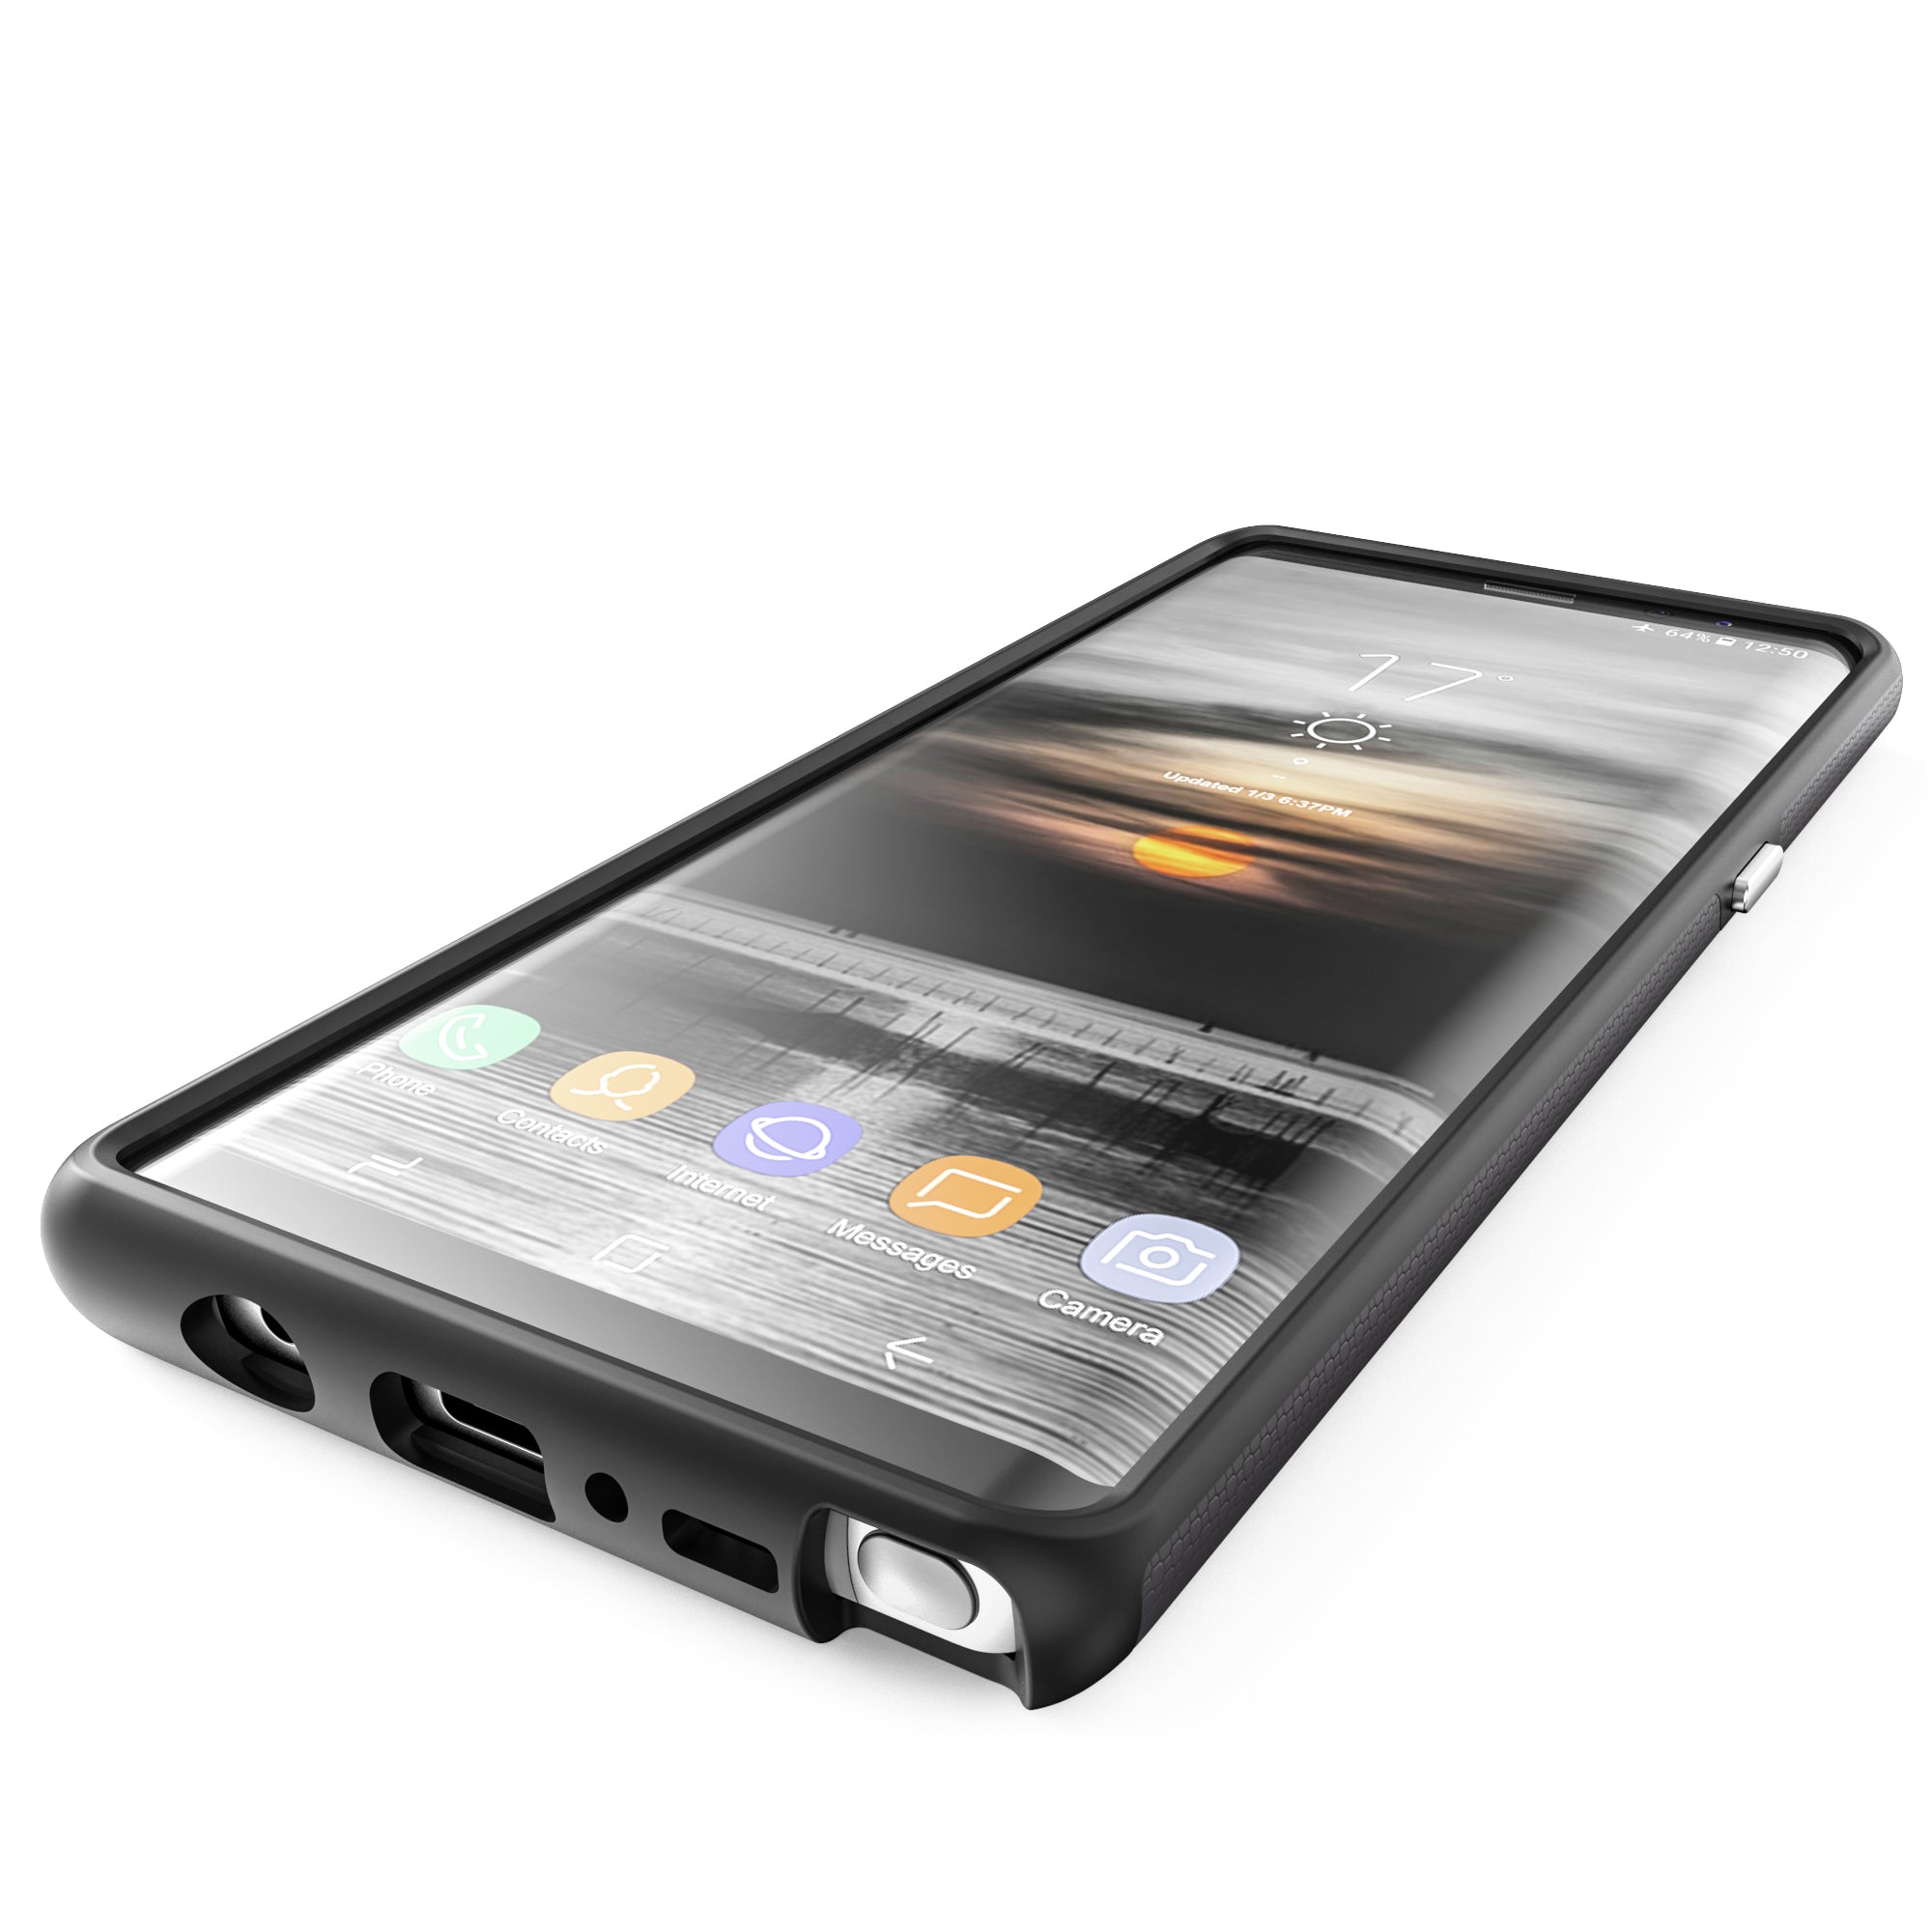 Galaxy Note 8 Case Dual Guard